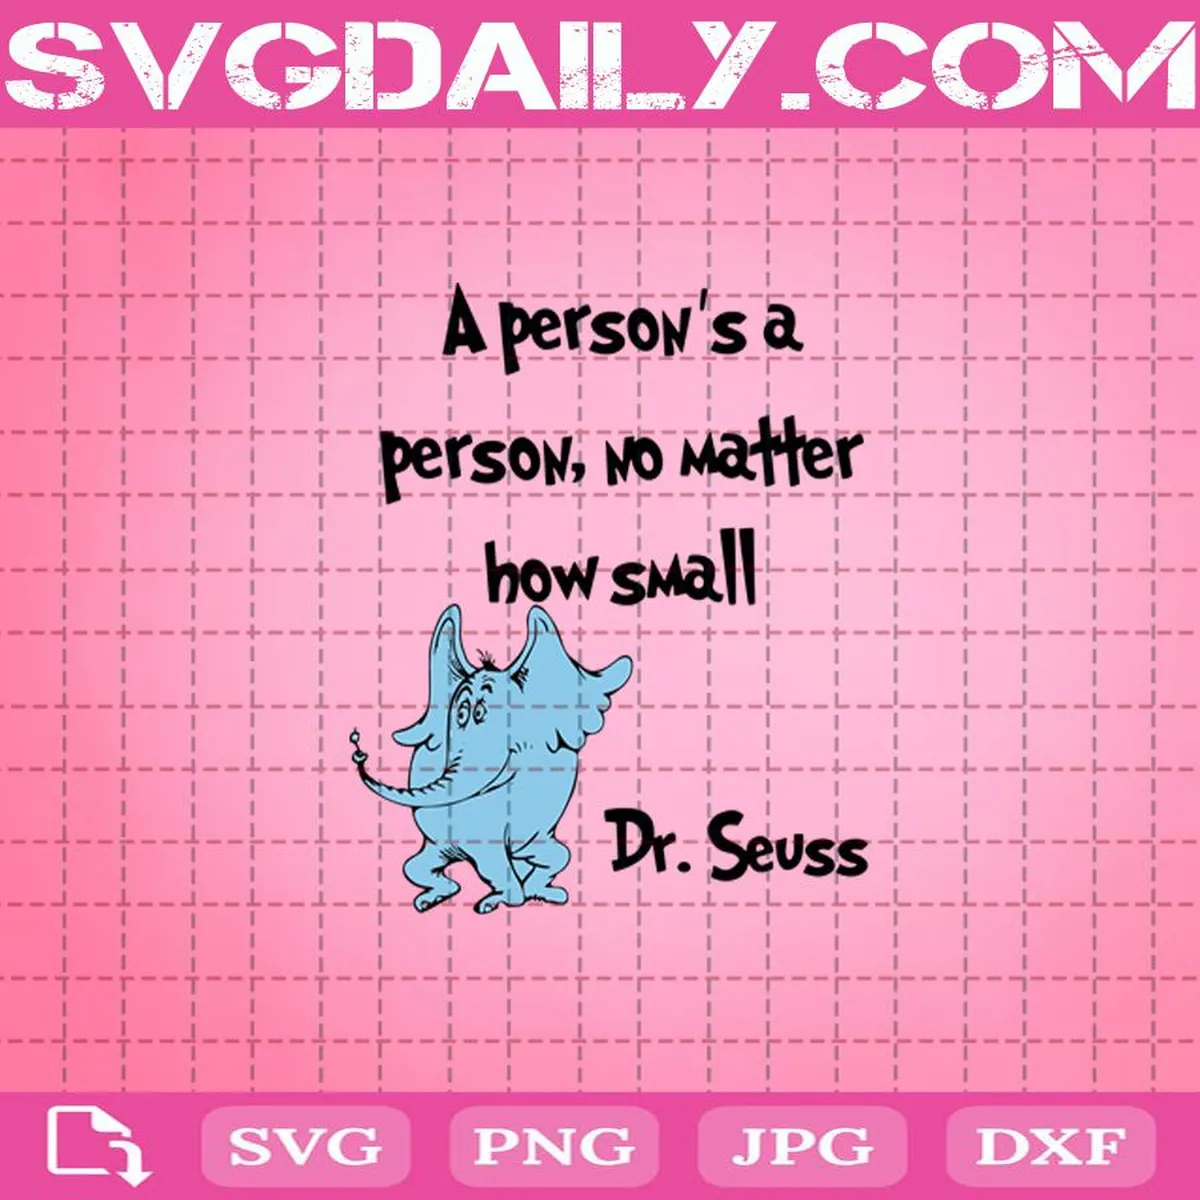 A Person's A Person No Matter How Small Svg, No Matter How Small Svg, Dr Seuss Svg, The Cat in The Hat Svg, Teacher Svg